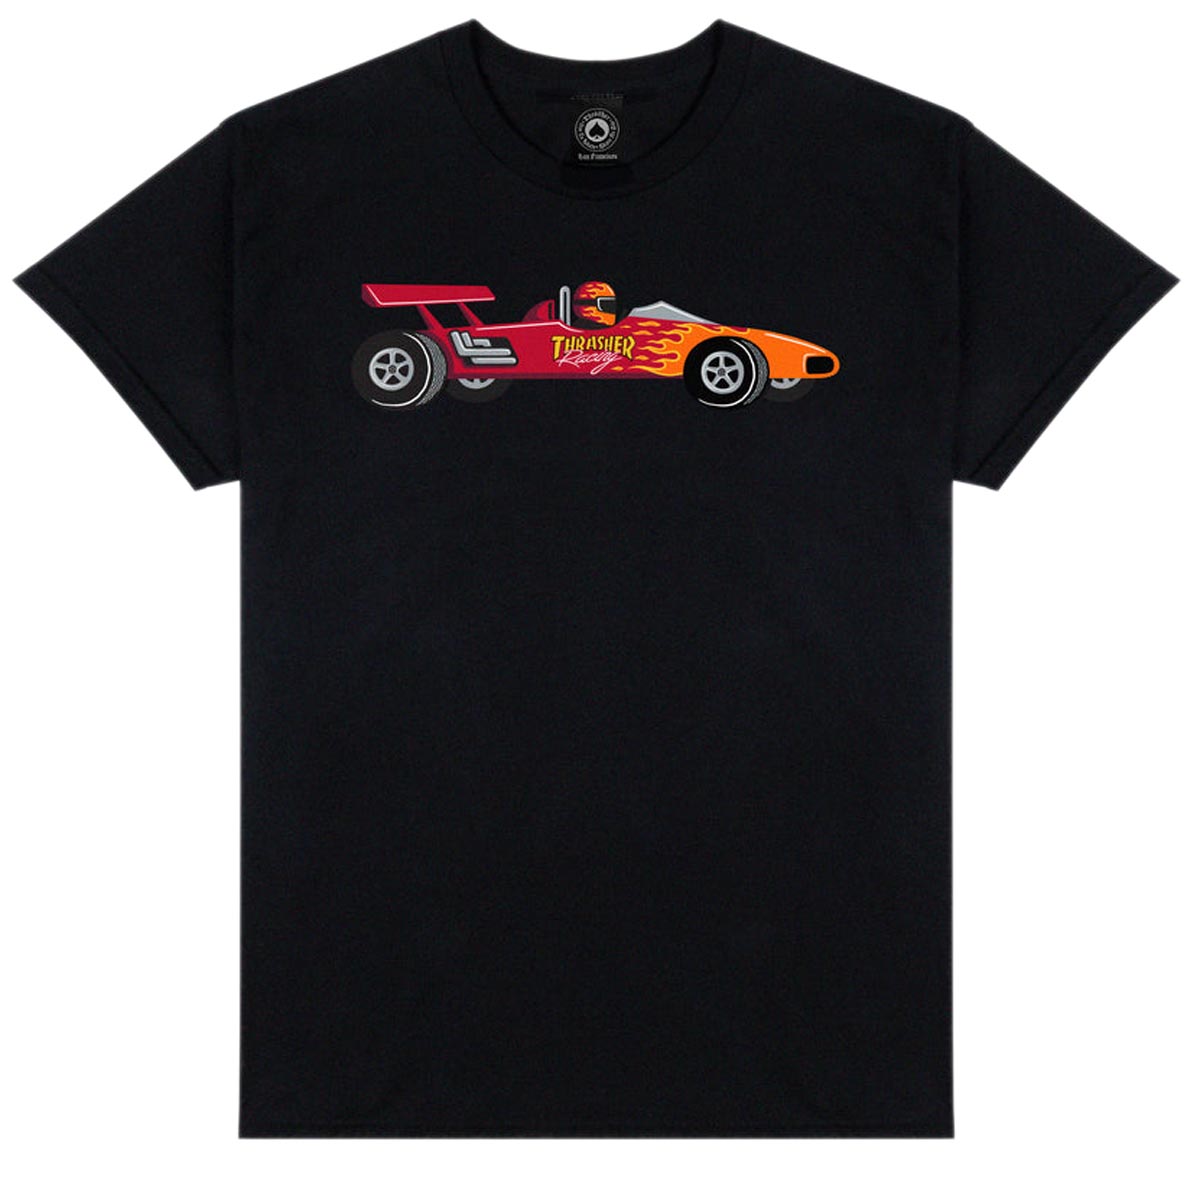 Thrasher Racecar T-Shirt - Black image 1